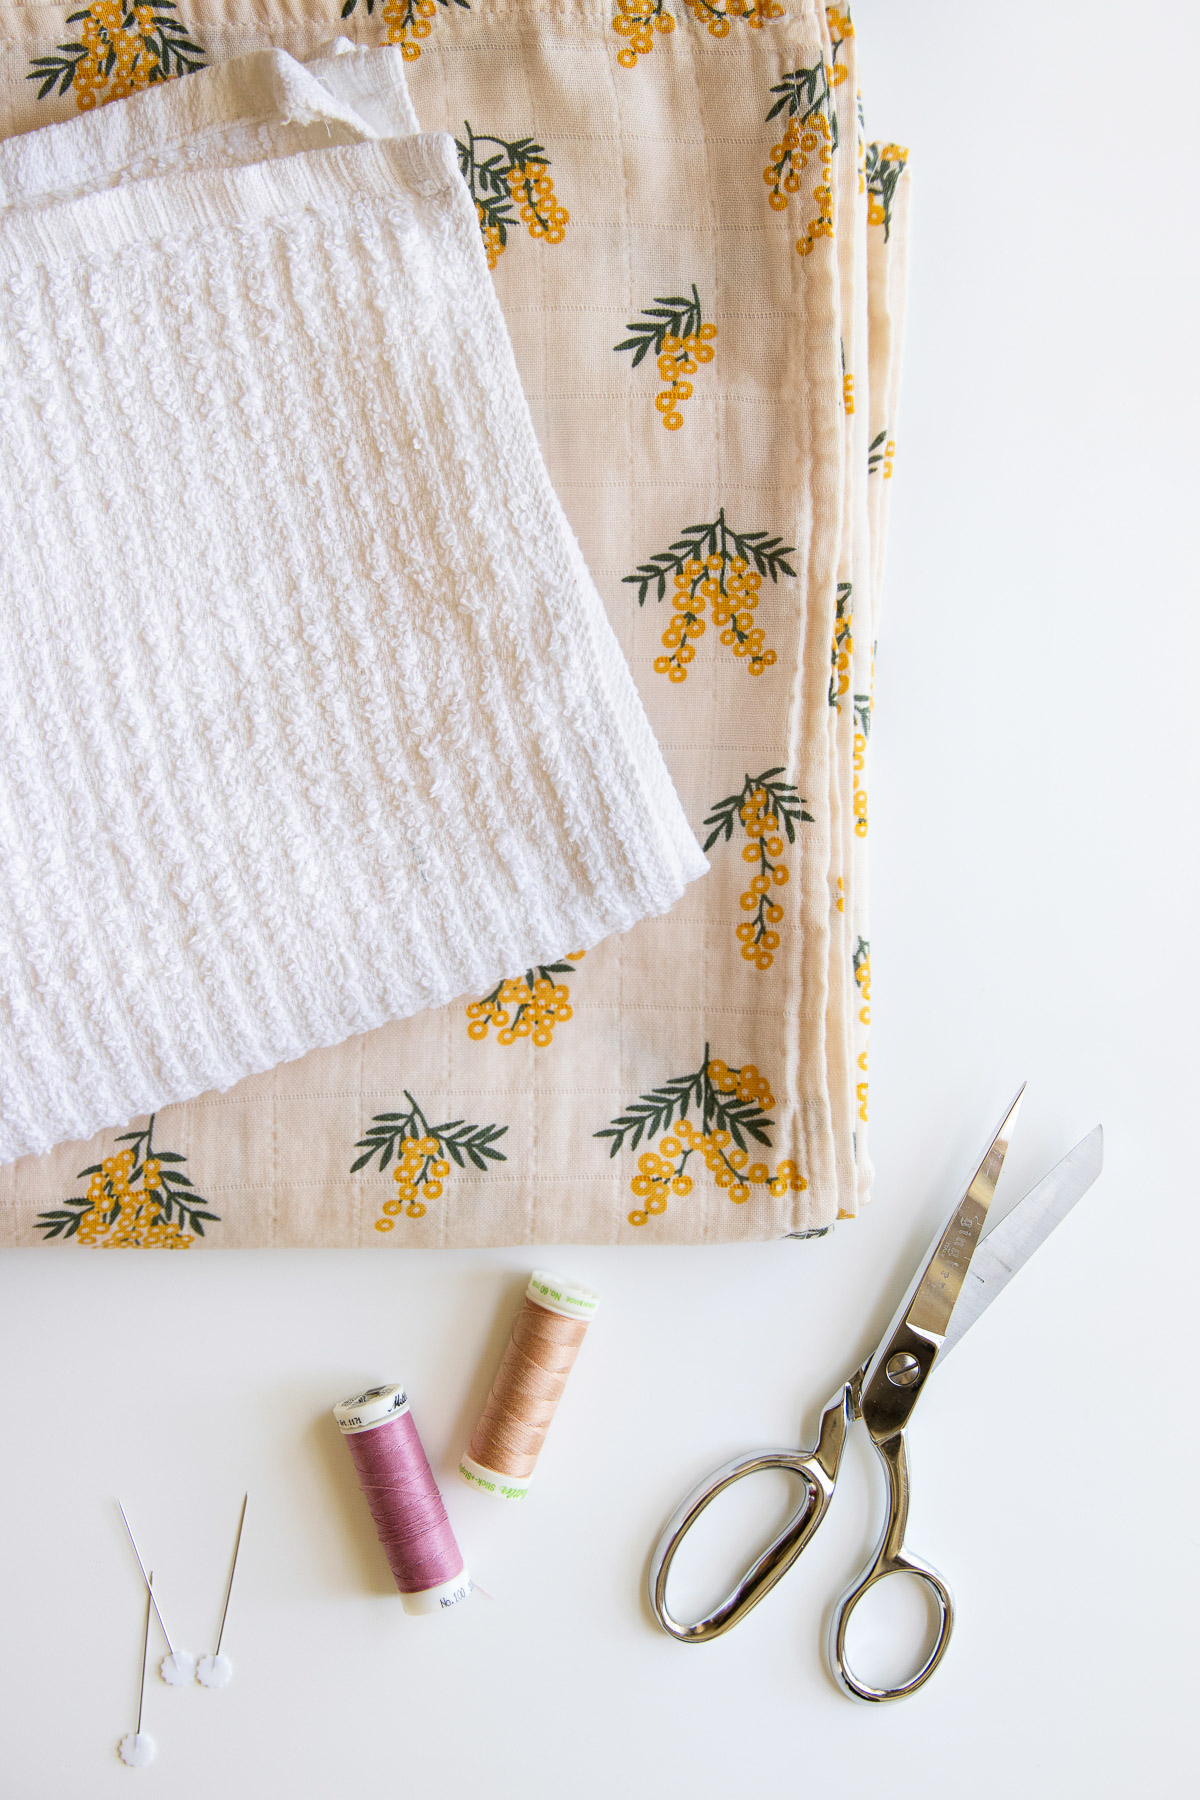 DIY unpaper towel supplies